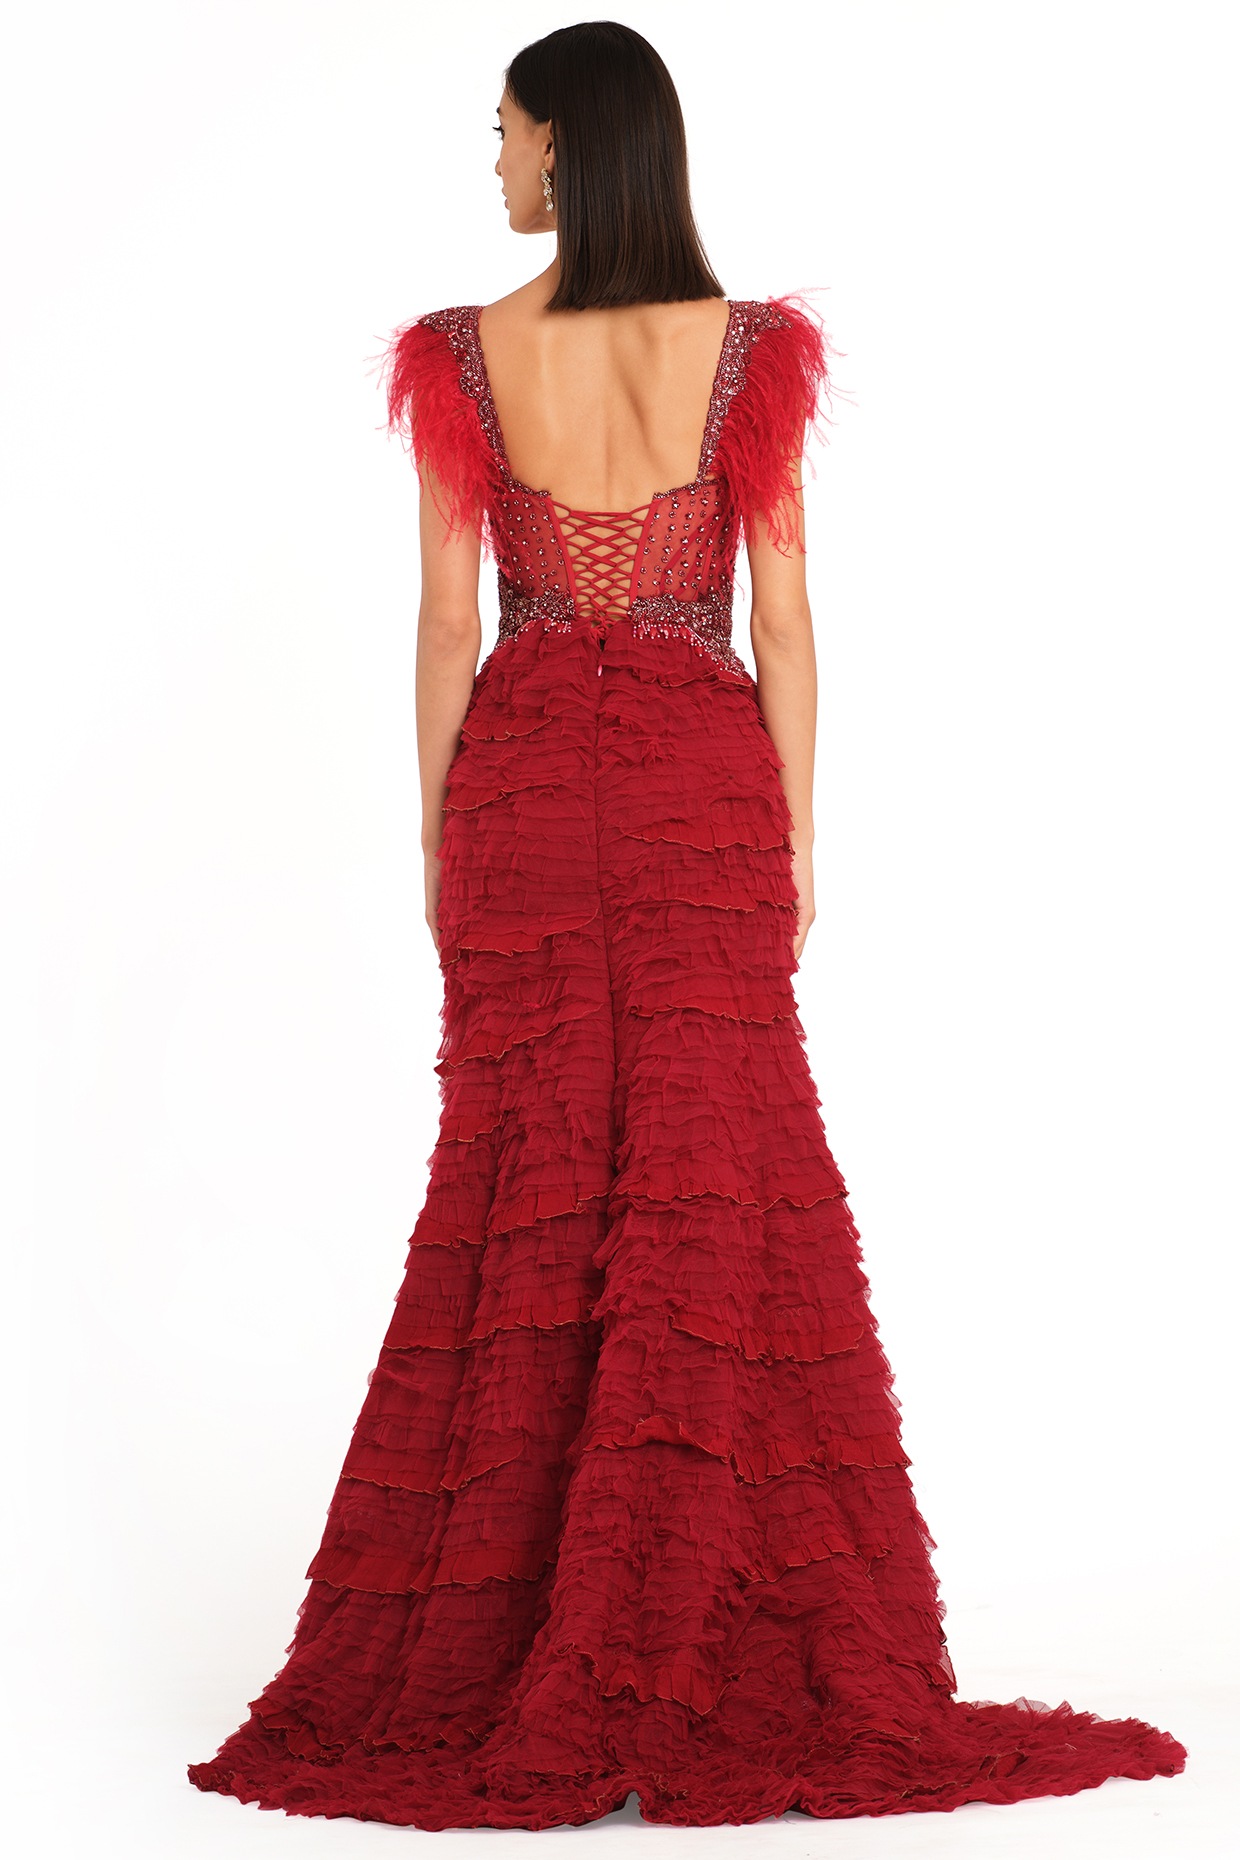 Plum Purple Net Designer Gown With Frill Flower Detailing | Simple dress  for girl, Kids gown, Kids frocks design